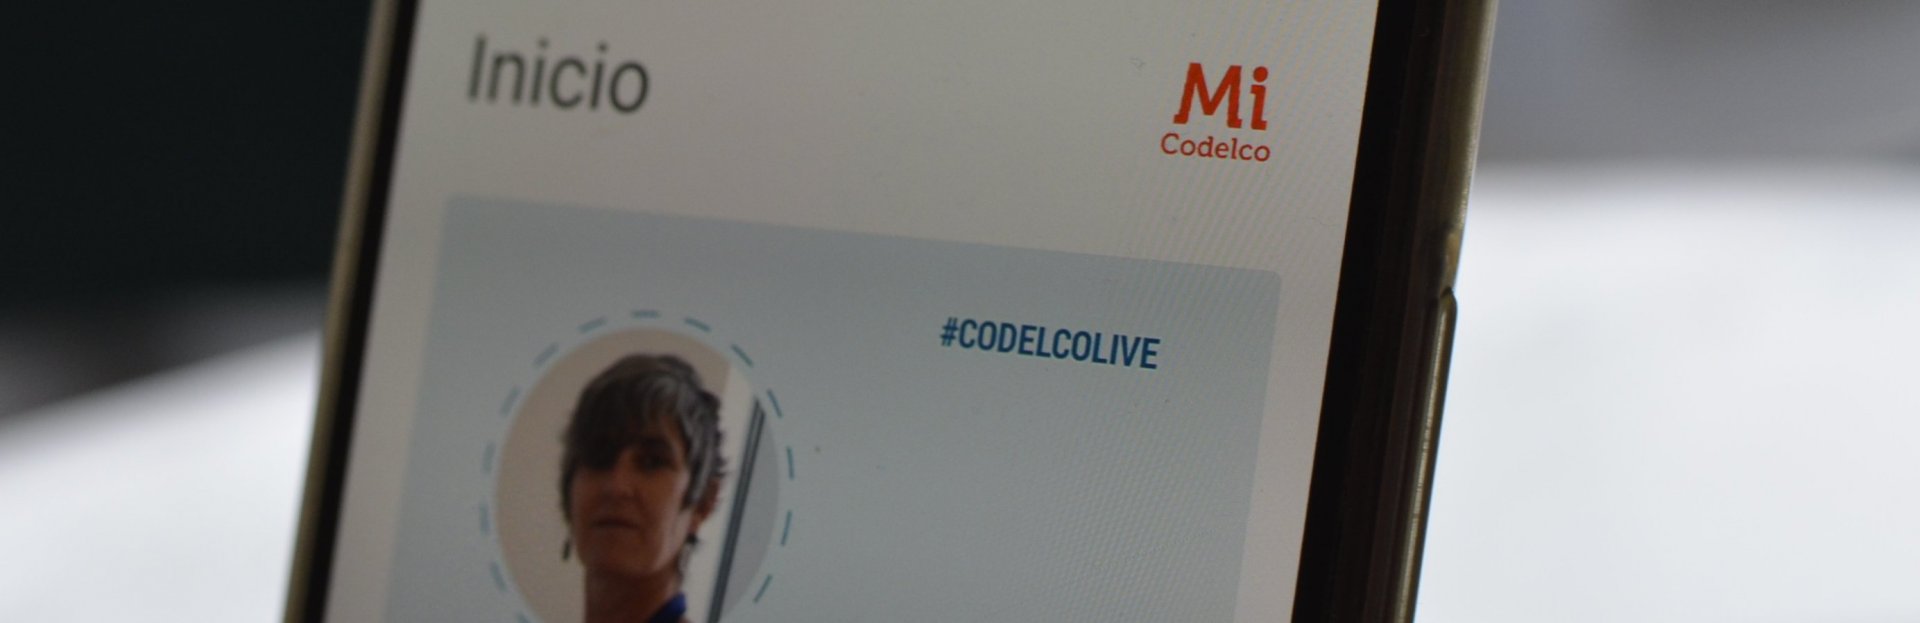 Celular mostrando la app Mi Codelco 2.0